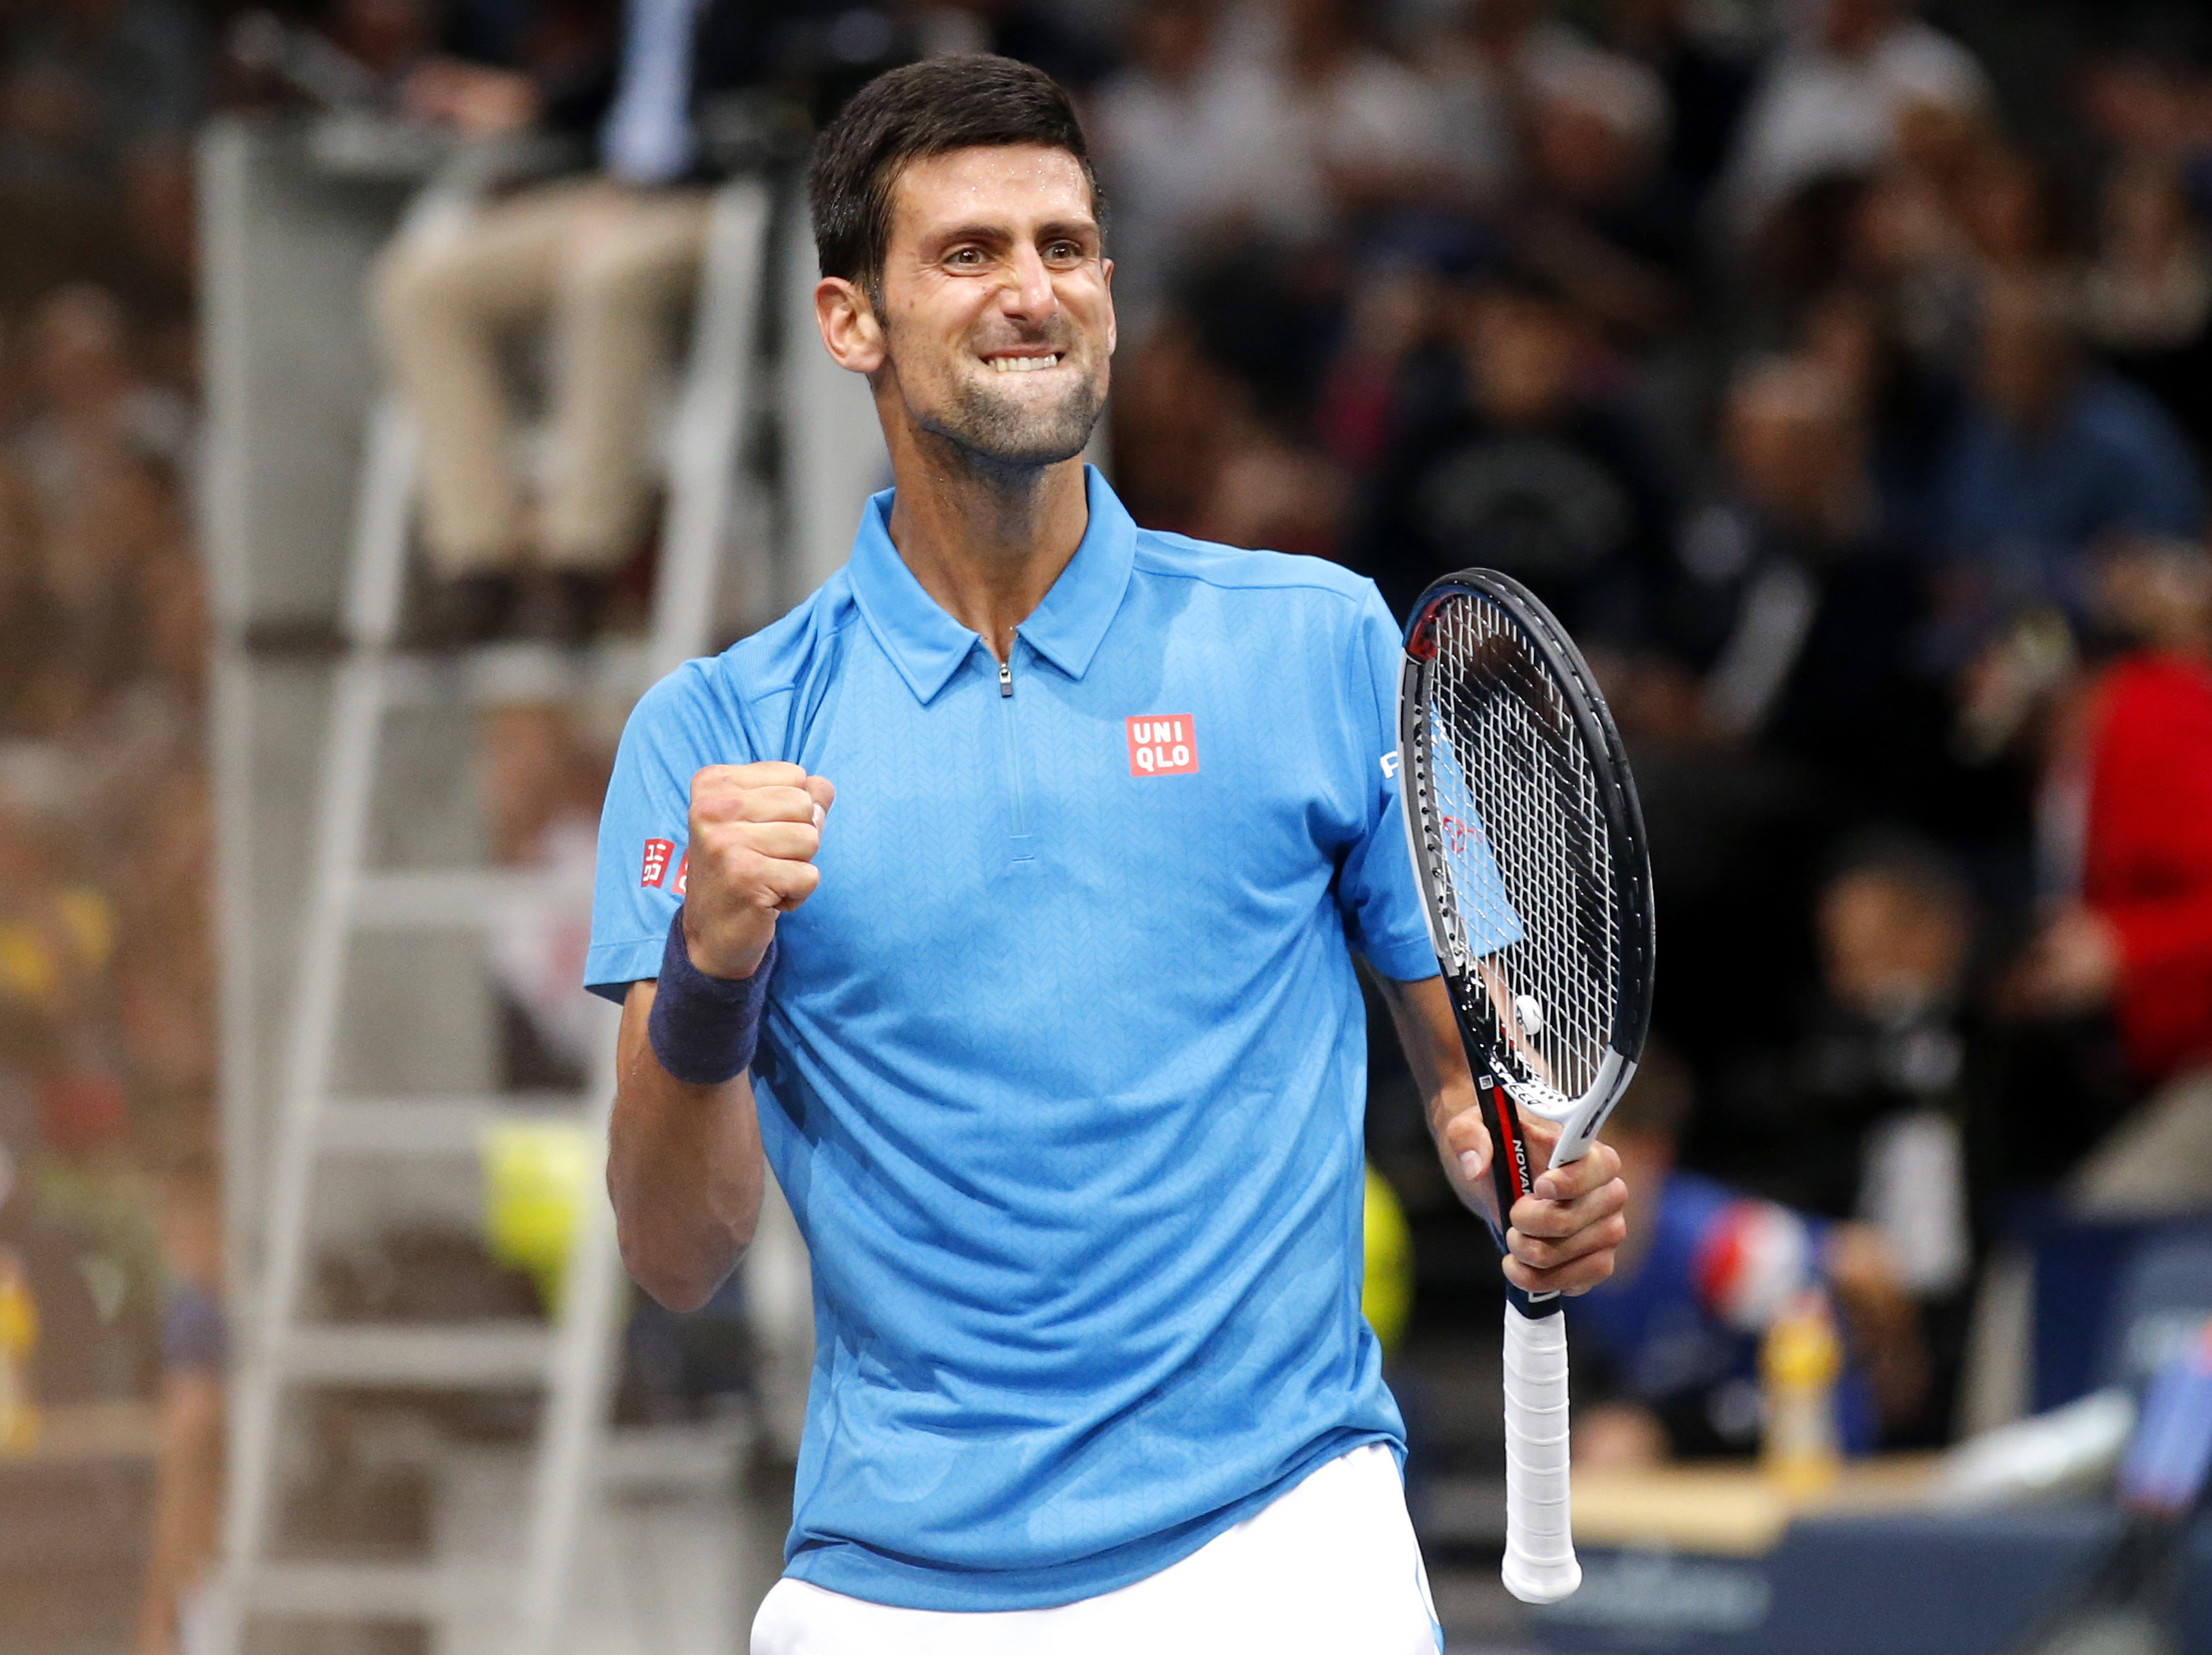 Novak Djokovic highly motivated as he looks to reclaim top ranking